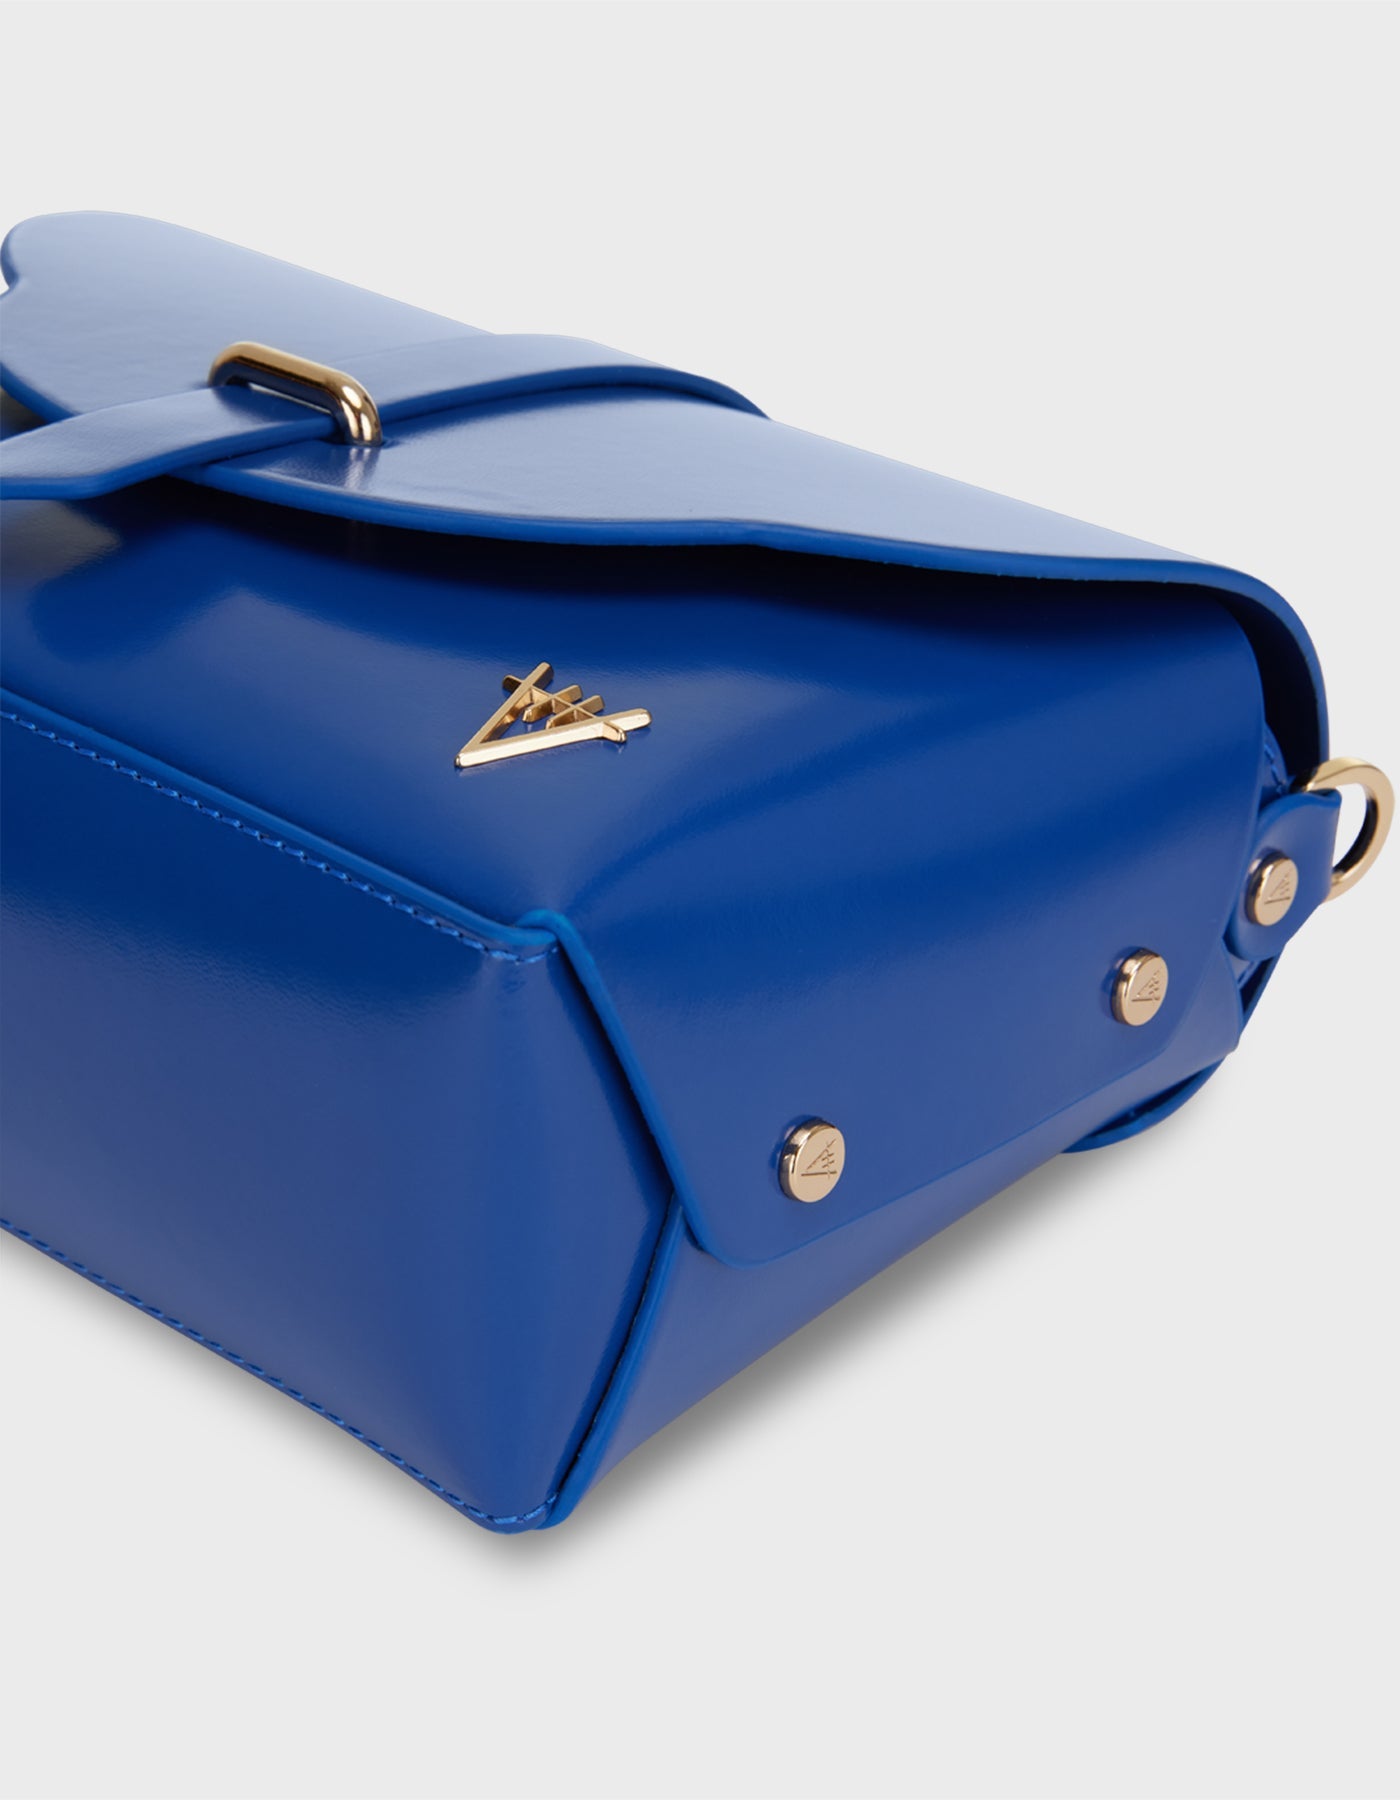 Hiva Atelier | Harmonia Shoulder Bag Sodalite Blue | Beautiful and Versatile Leather Accessories